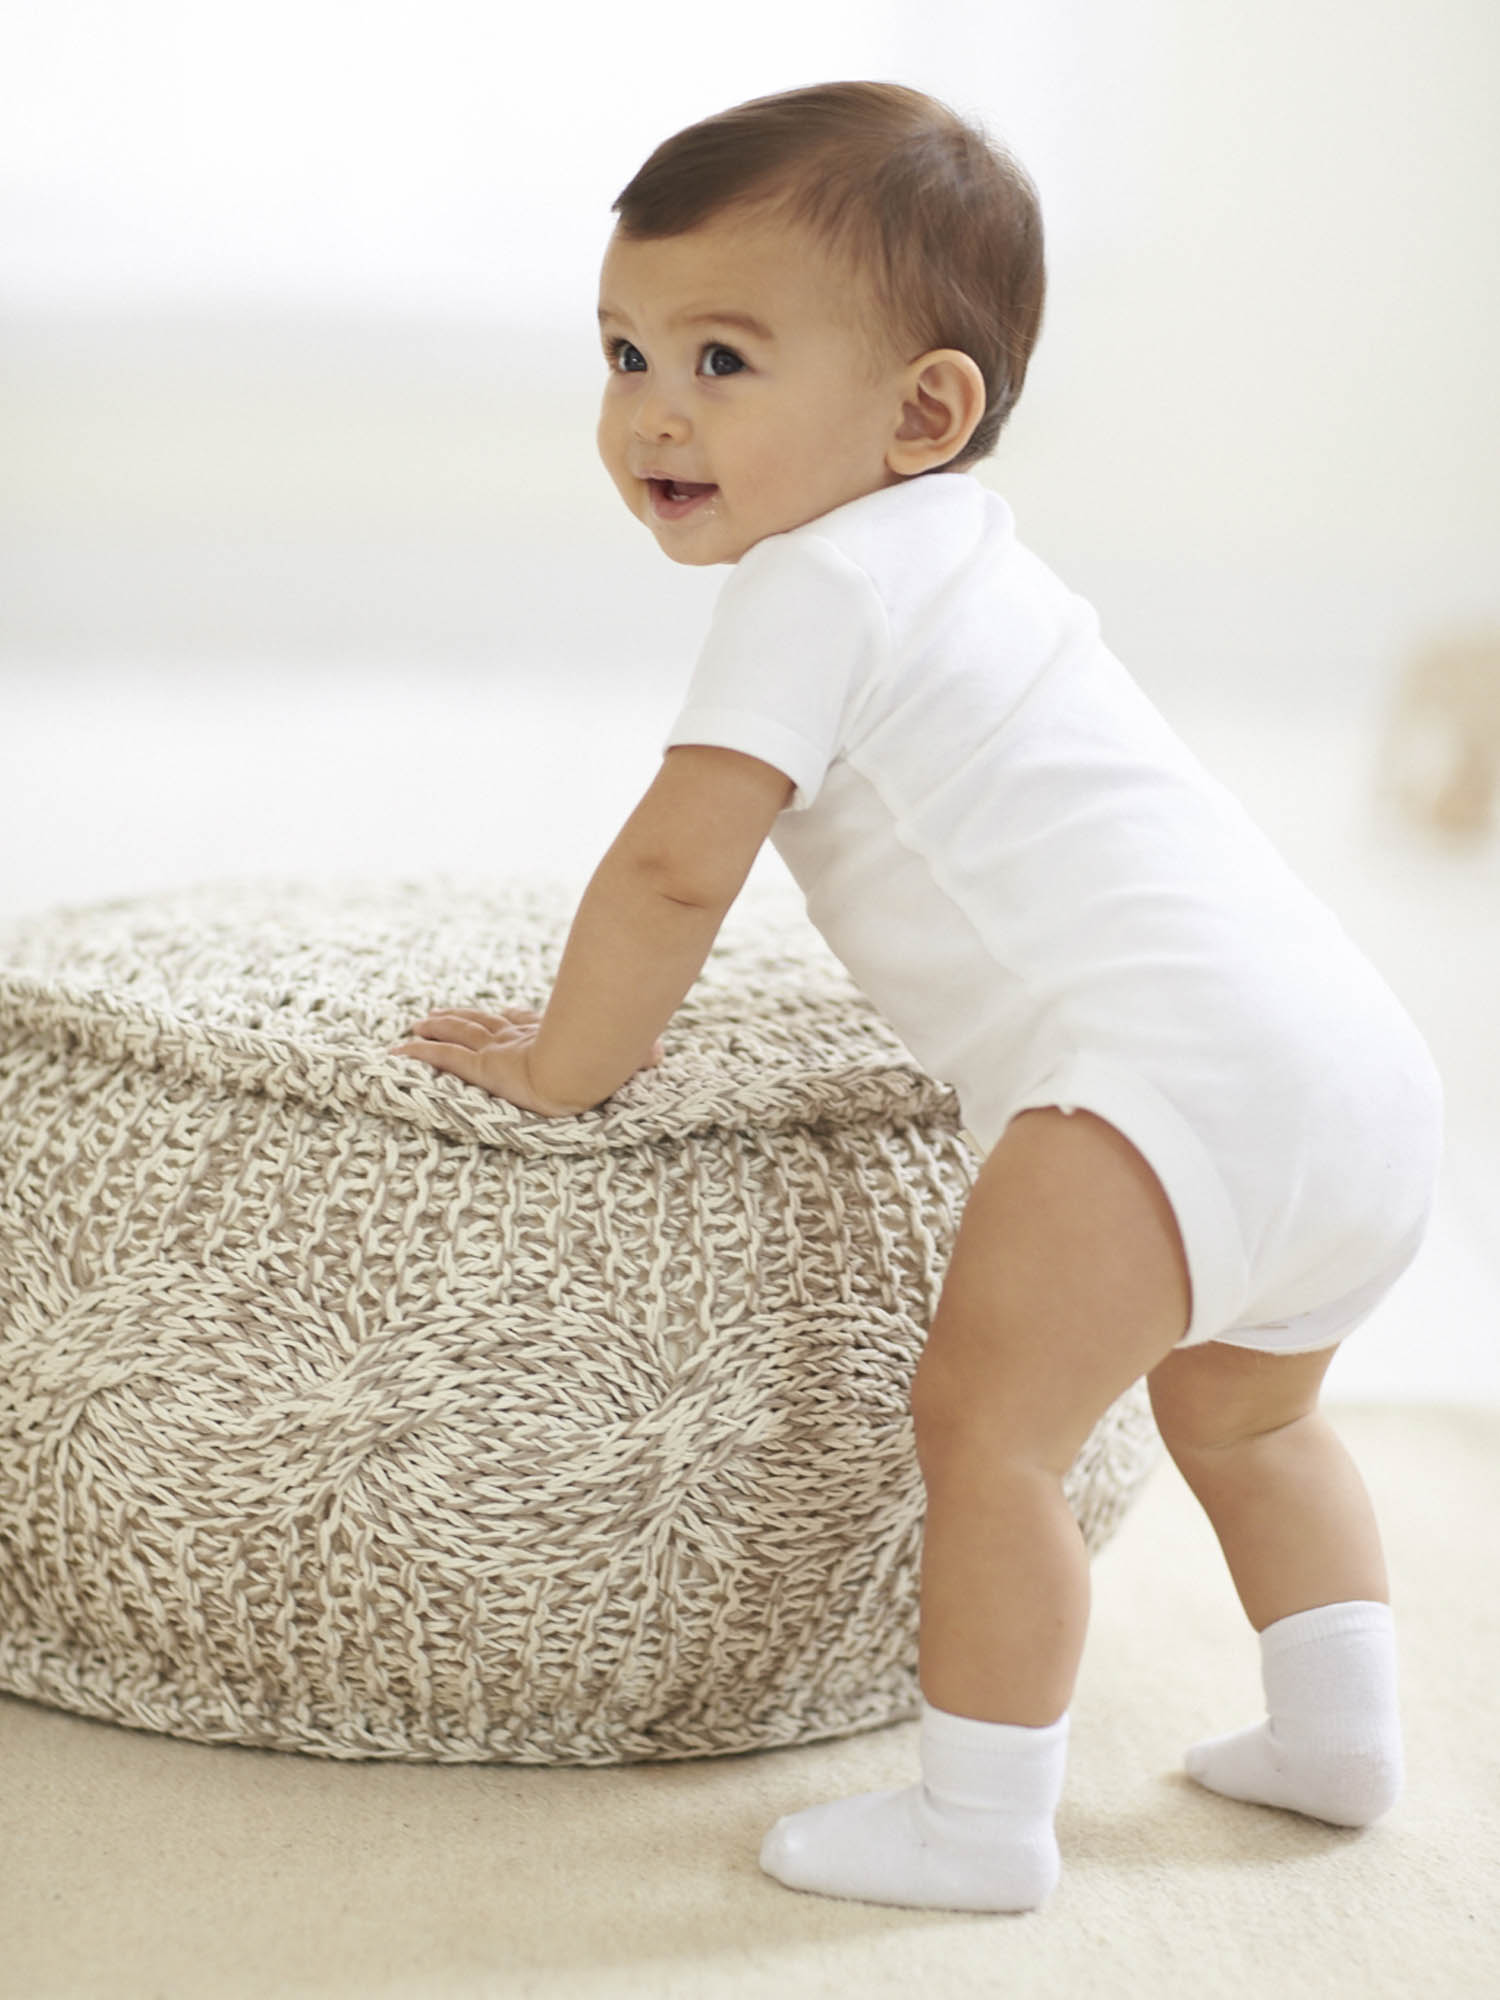 Gerber Baby Unisex White Short Sleeve Cotton Onesies Bodysuits, 8-Pack, Preemie-24 Months - image 4 of 13